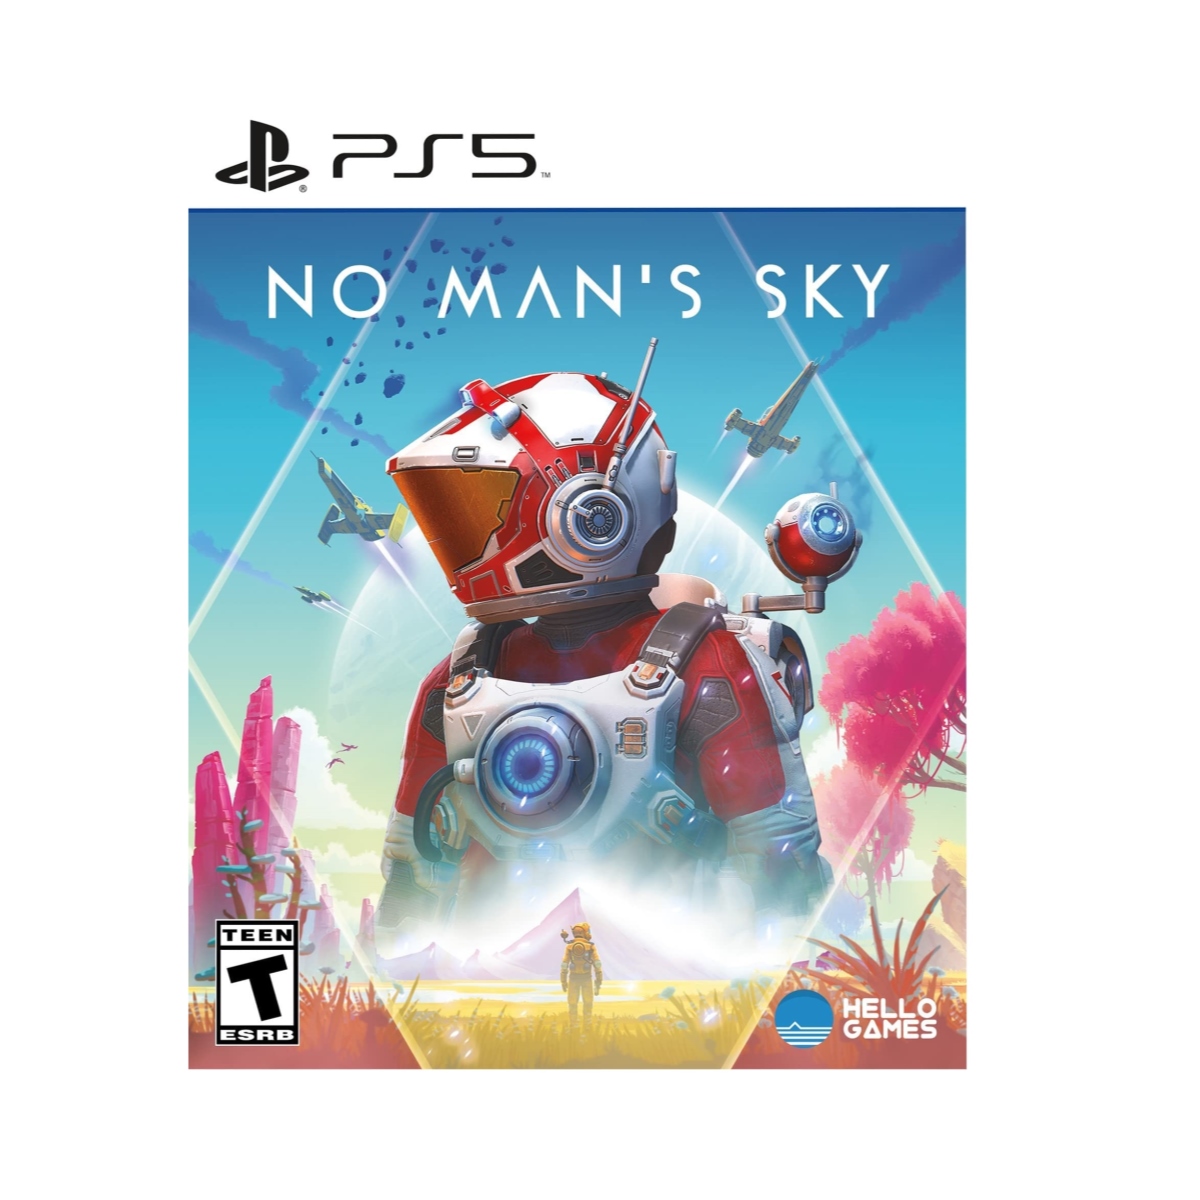 No man's sky PS5 